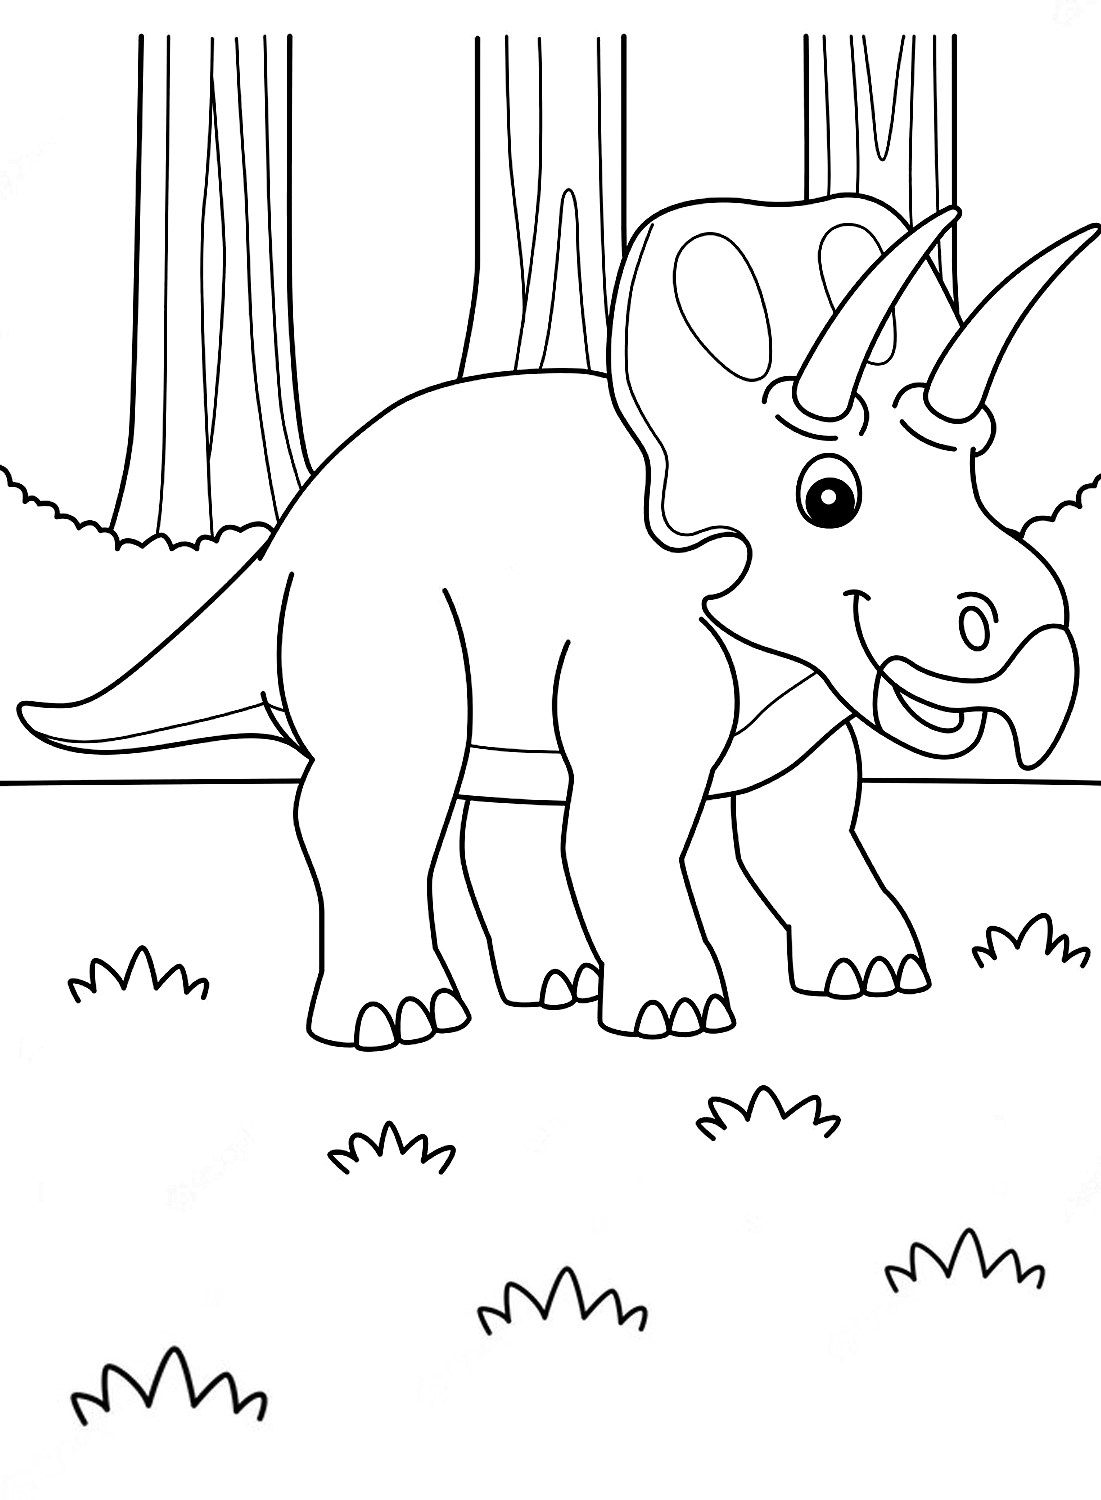 Triceratops kleurplaat